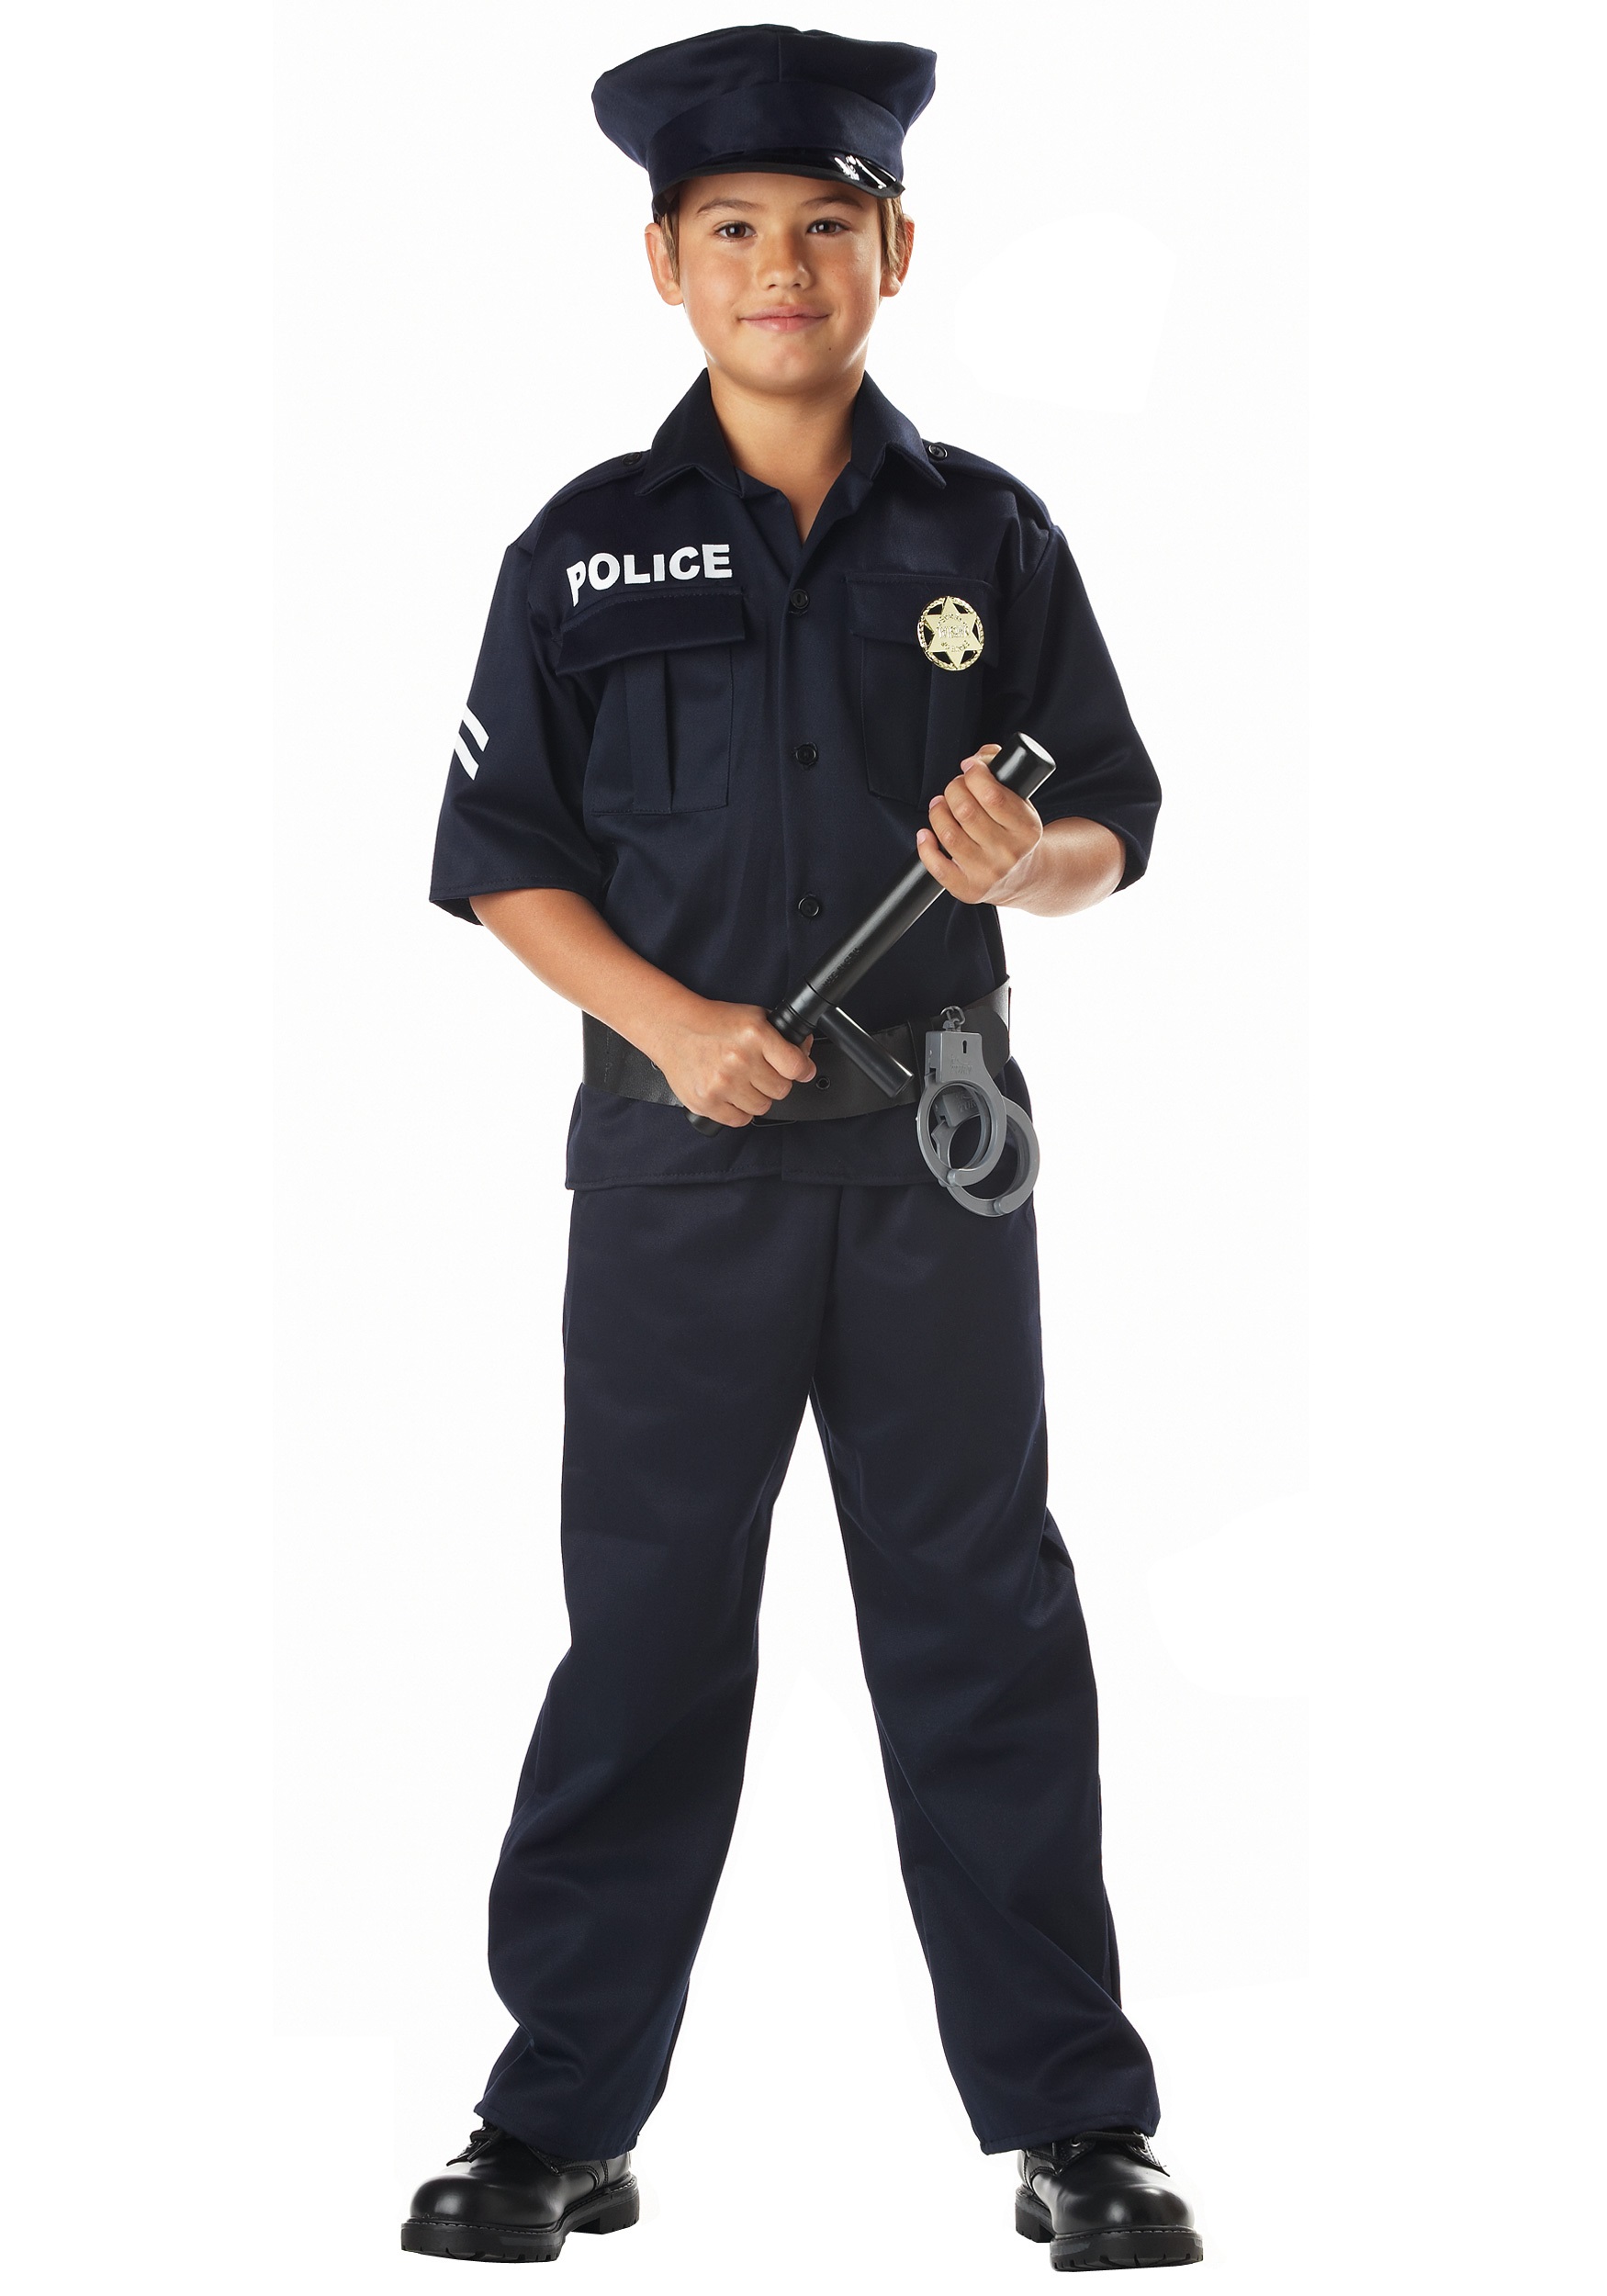 Kid’s Police Costume